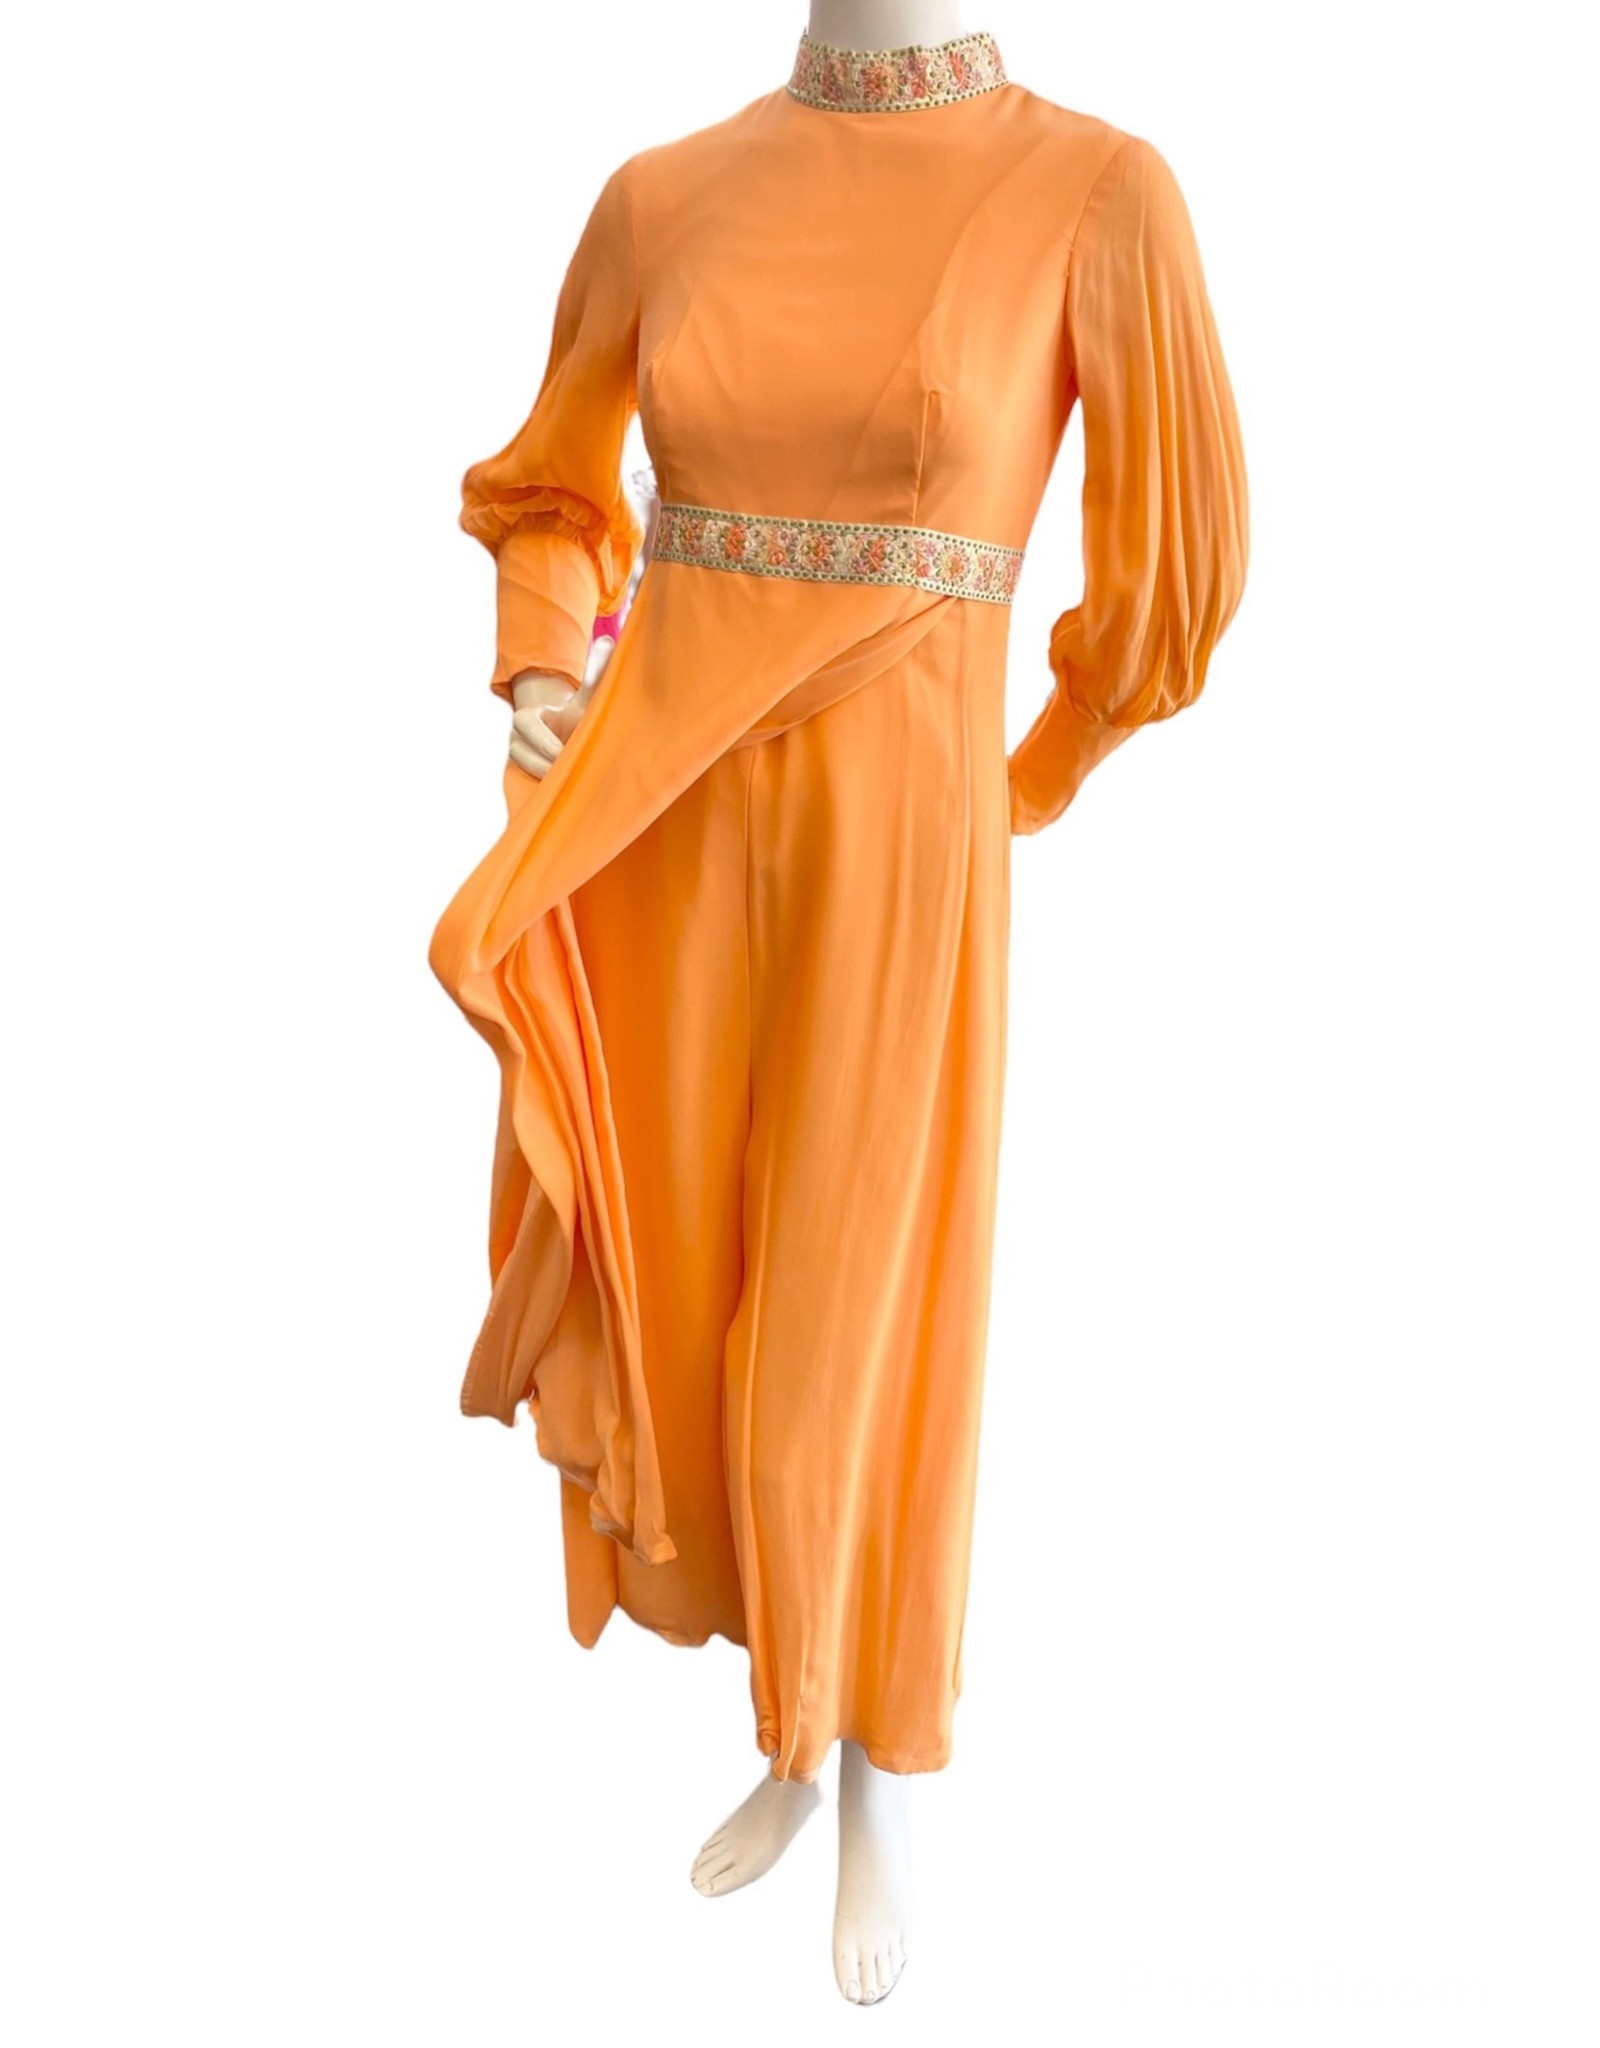 Angelair by Monika 70s orange high waisted “pant” dress